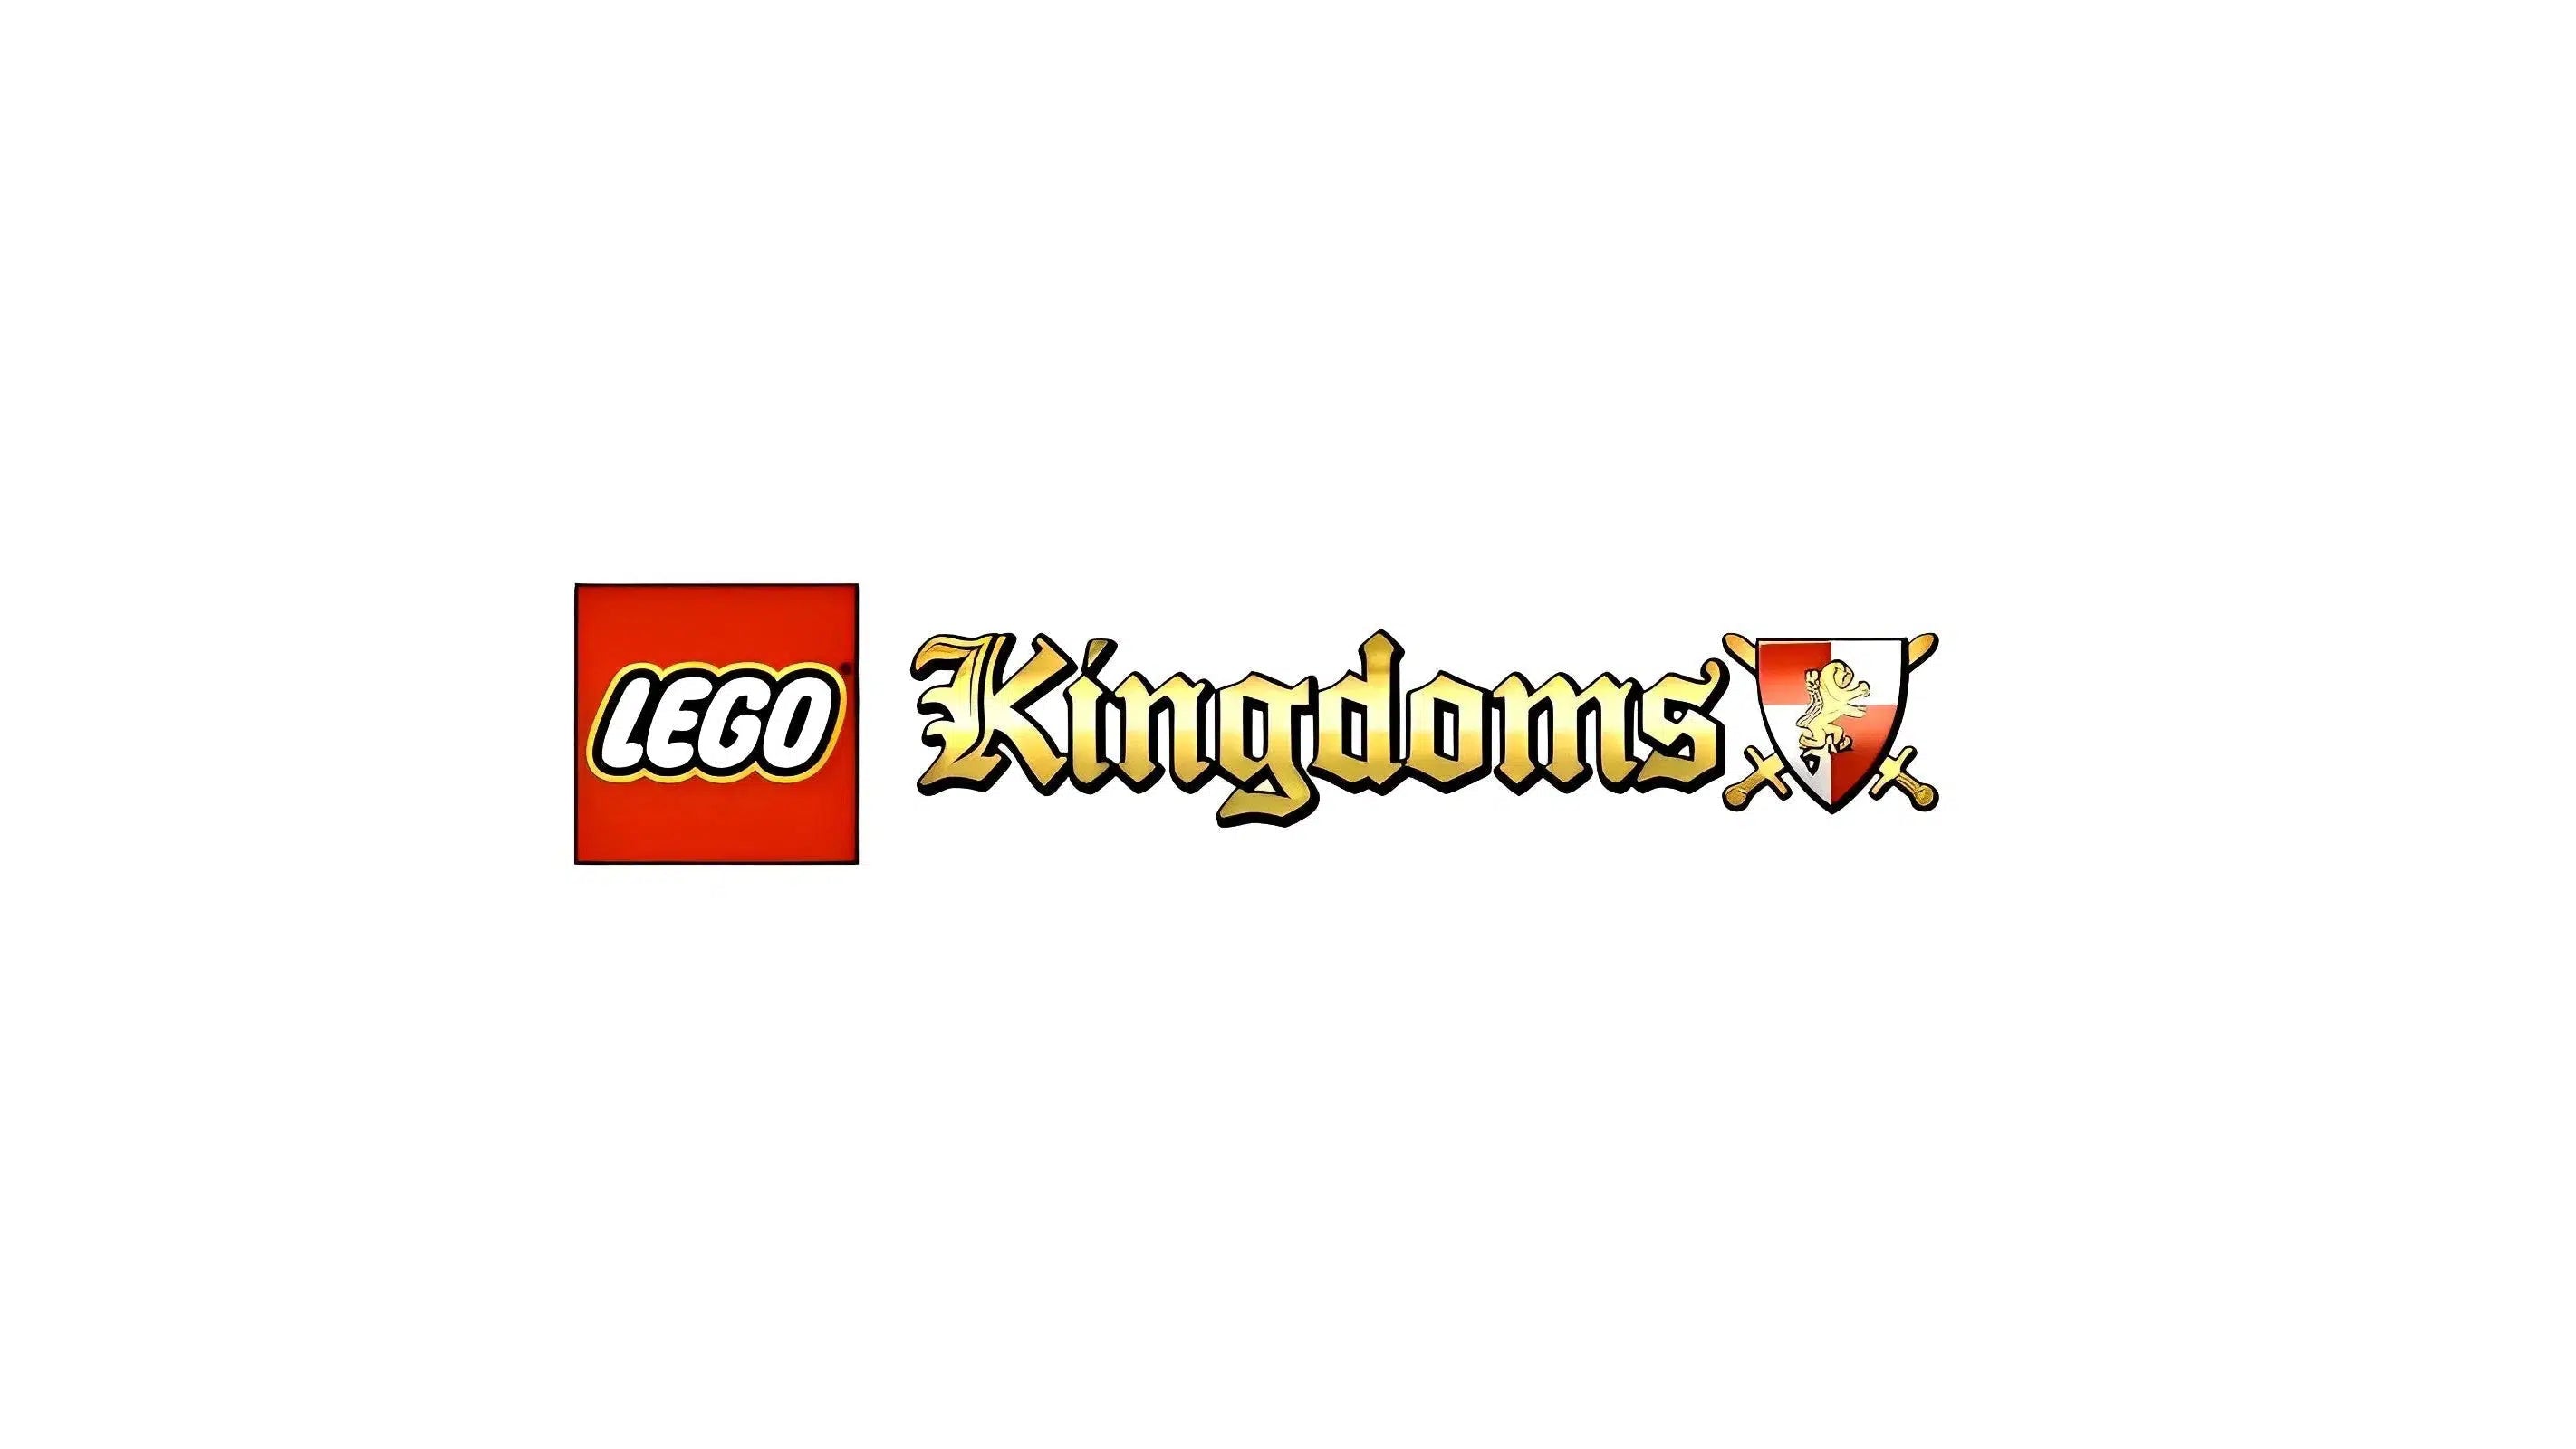 LEGO Kingdoms Logo